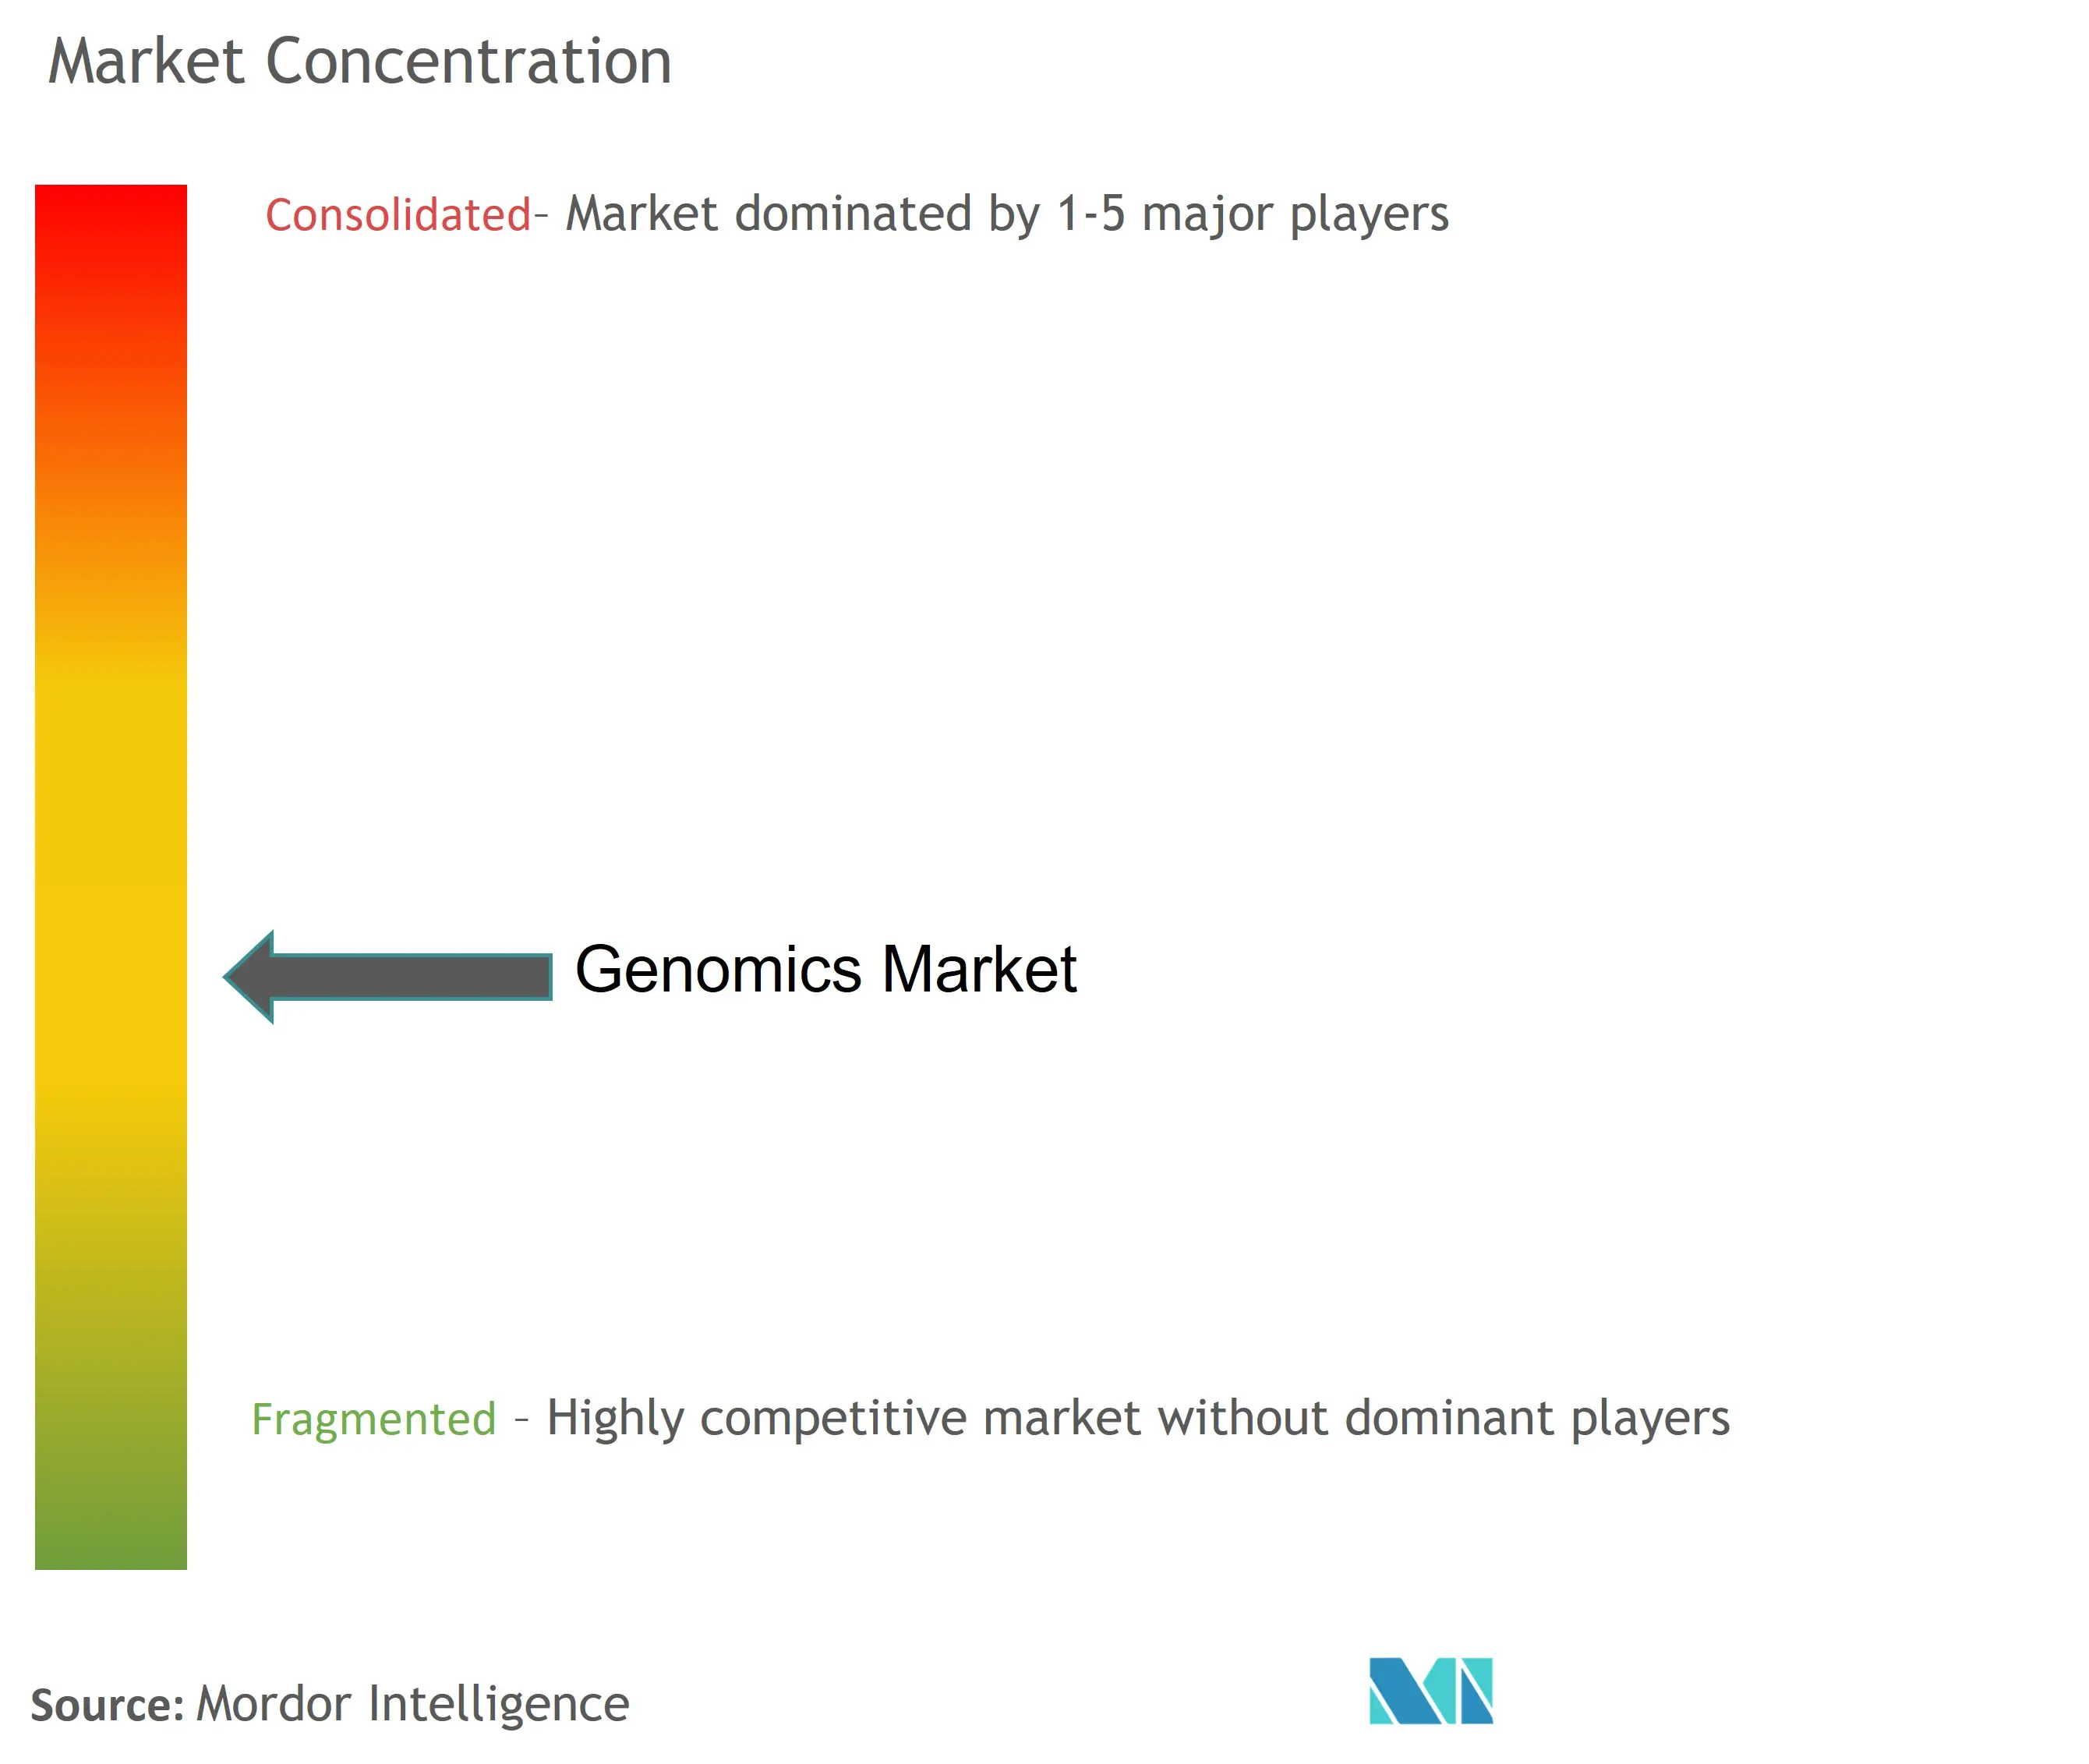 Genomics Market Concentration